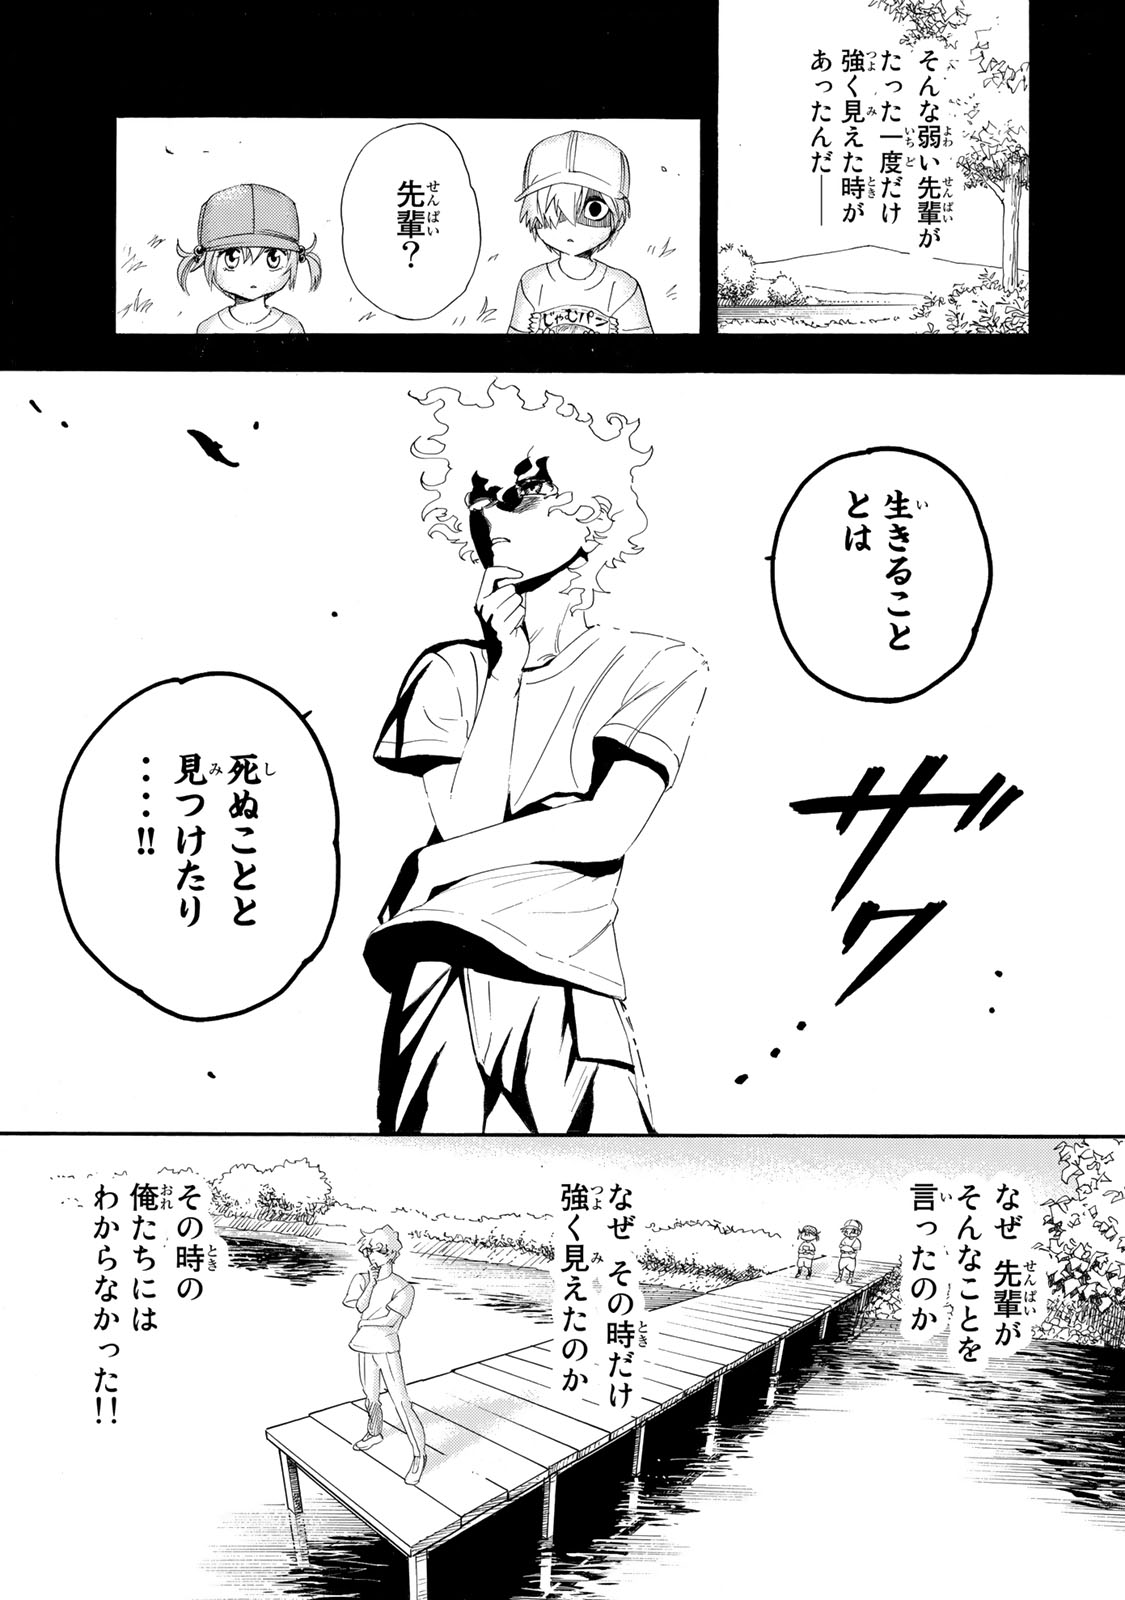 Hataraku Saibou - Chapter 27 - Page 9